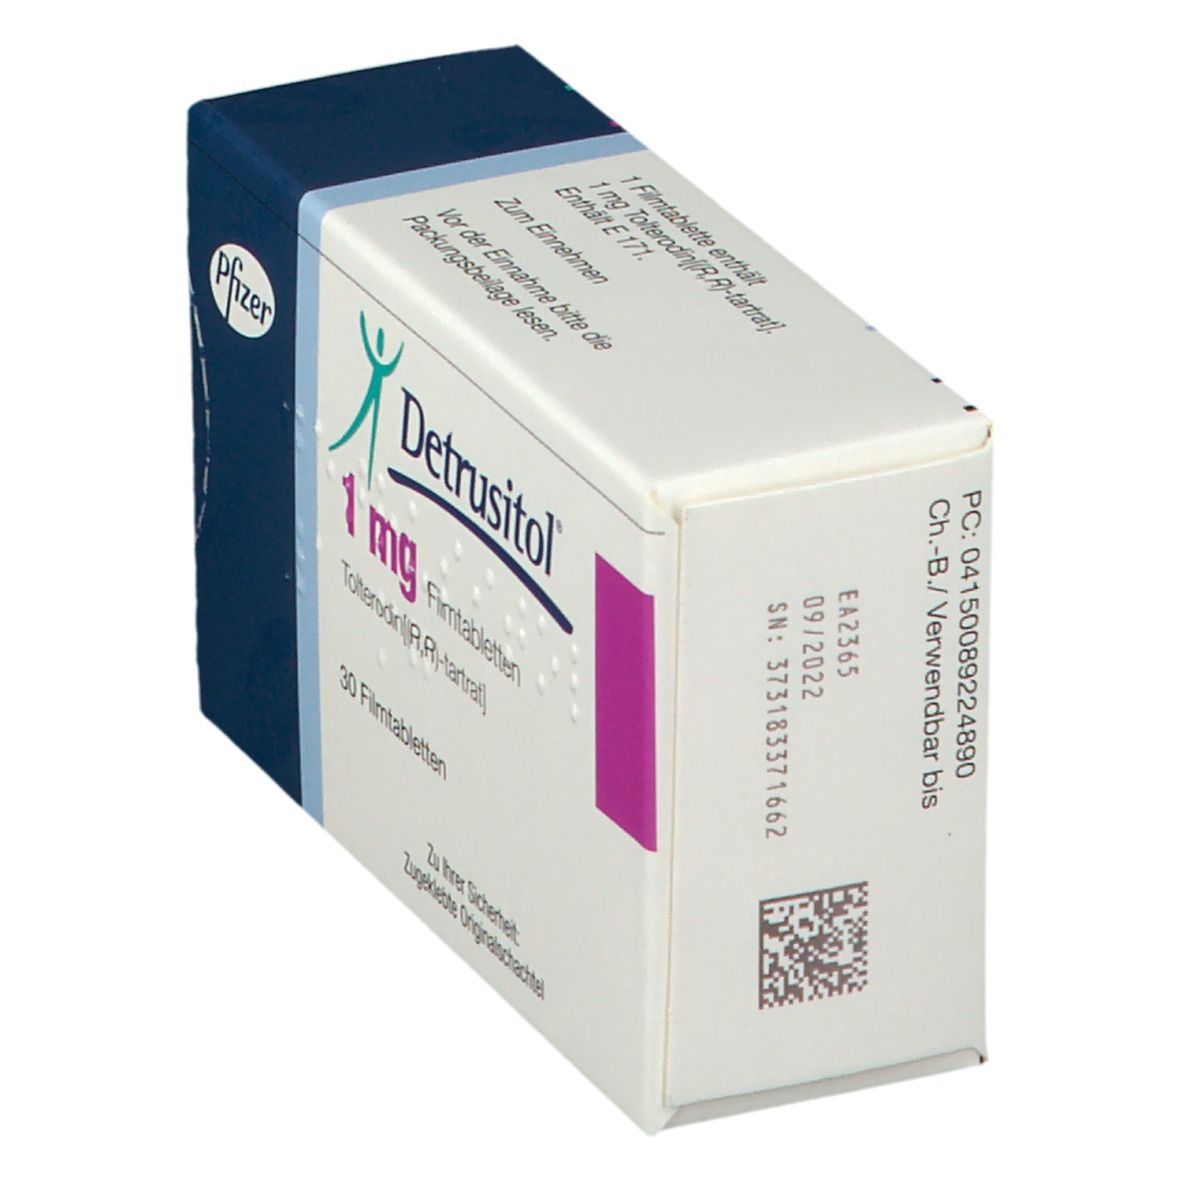 Detrusitol® 1 mg